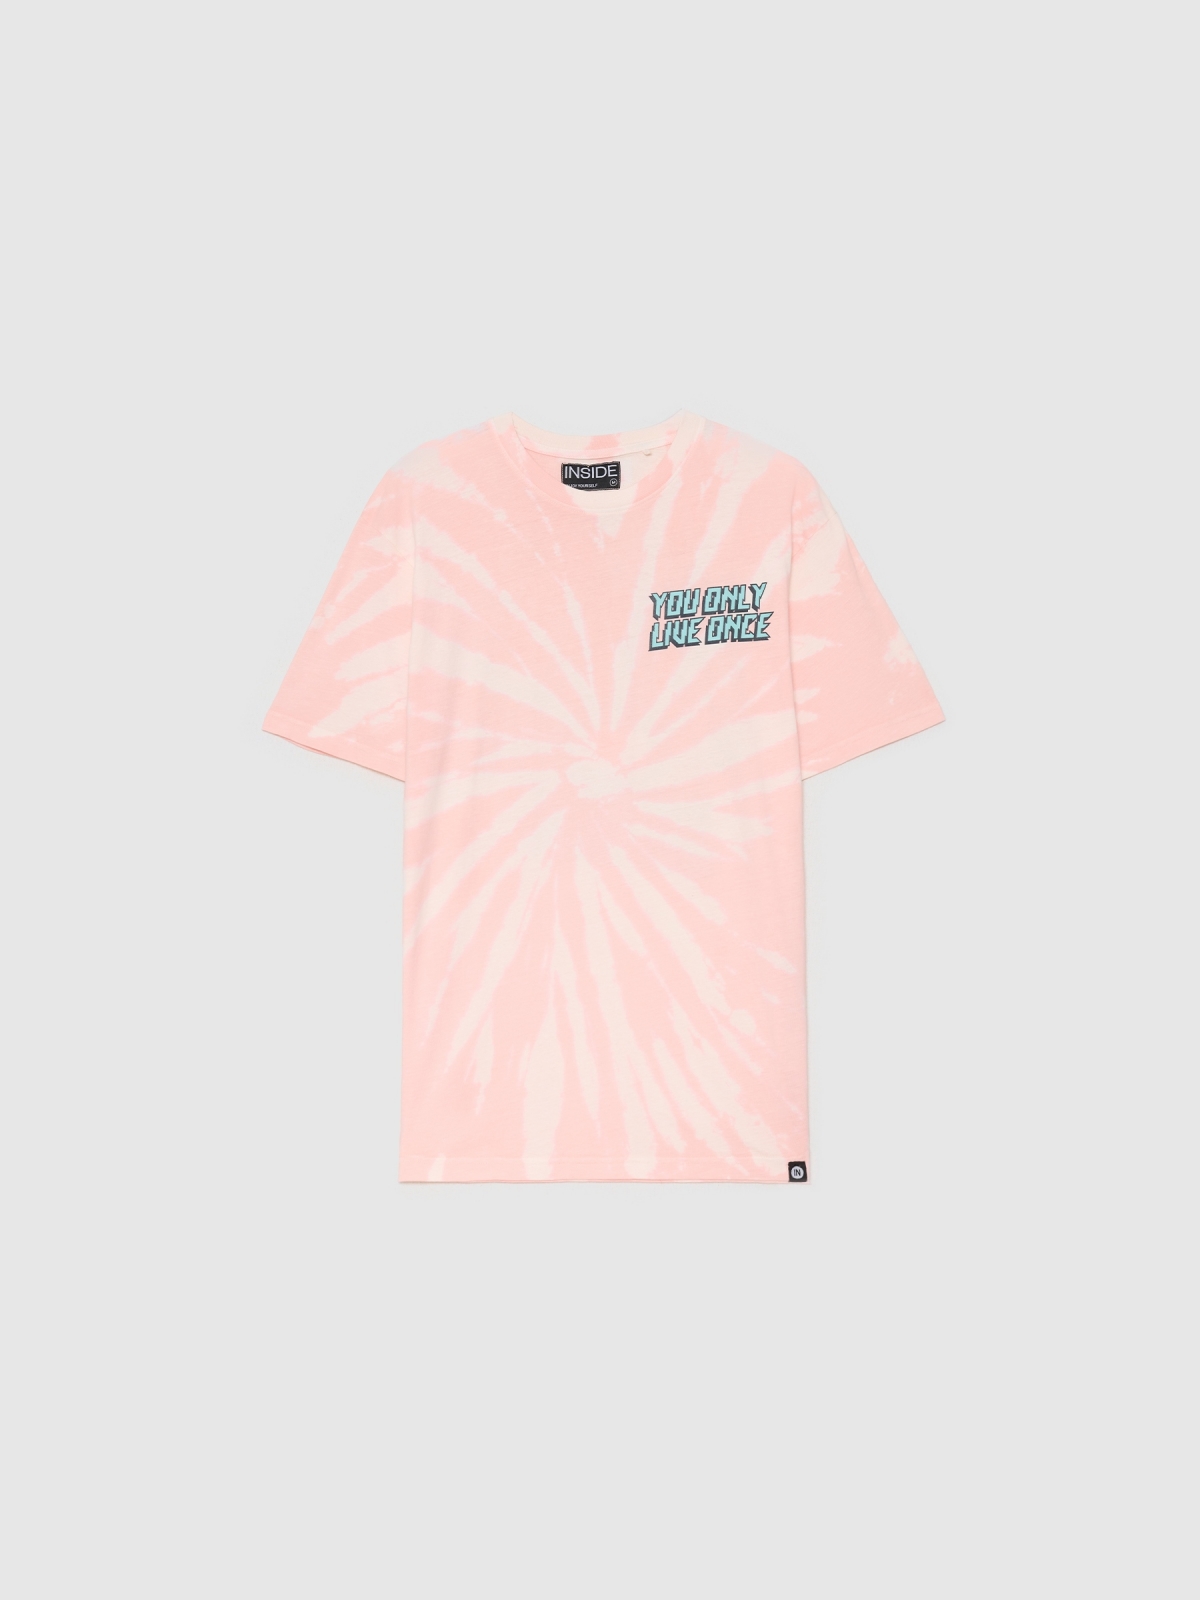  Tie dye skull t-shirt peach pink